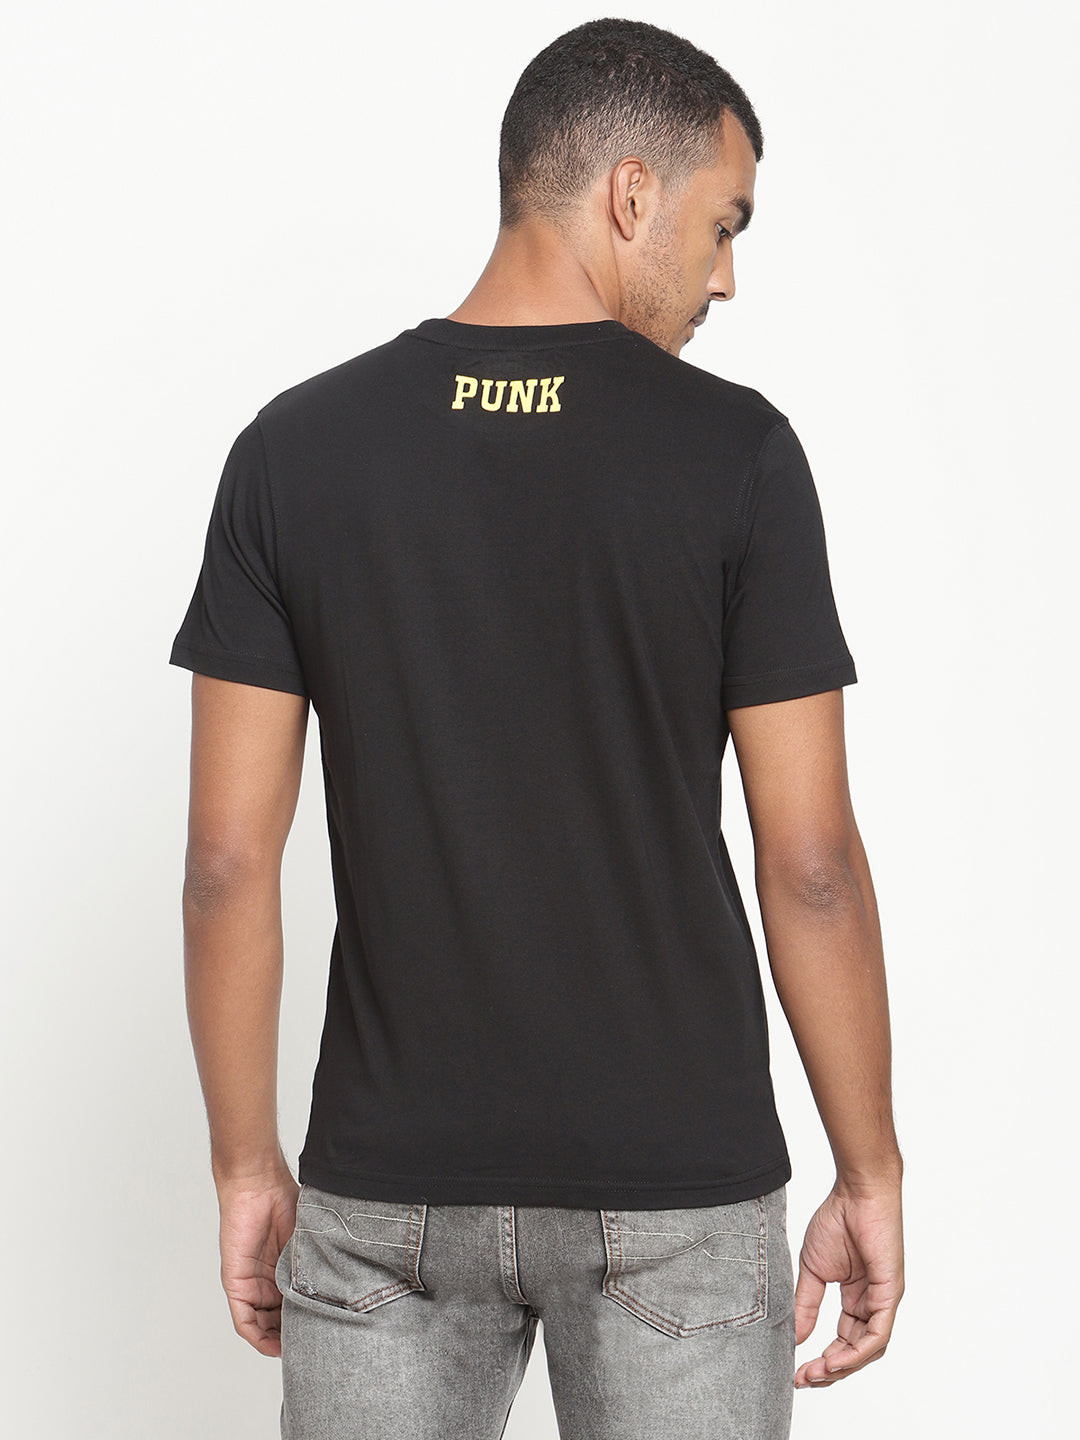 Punk REAL Black T-Shirt